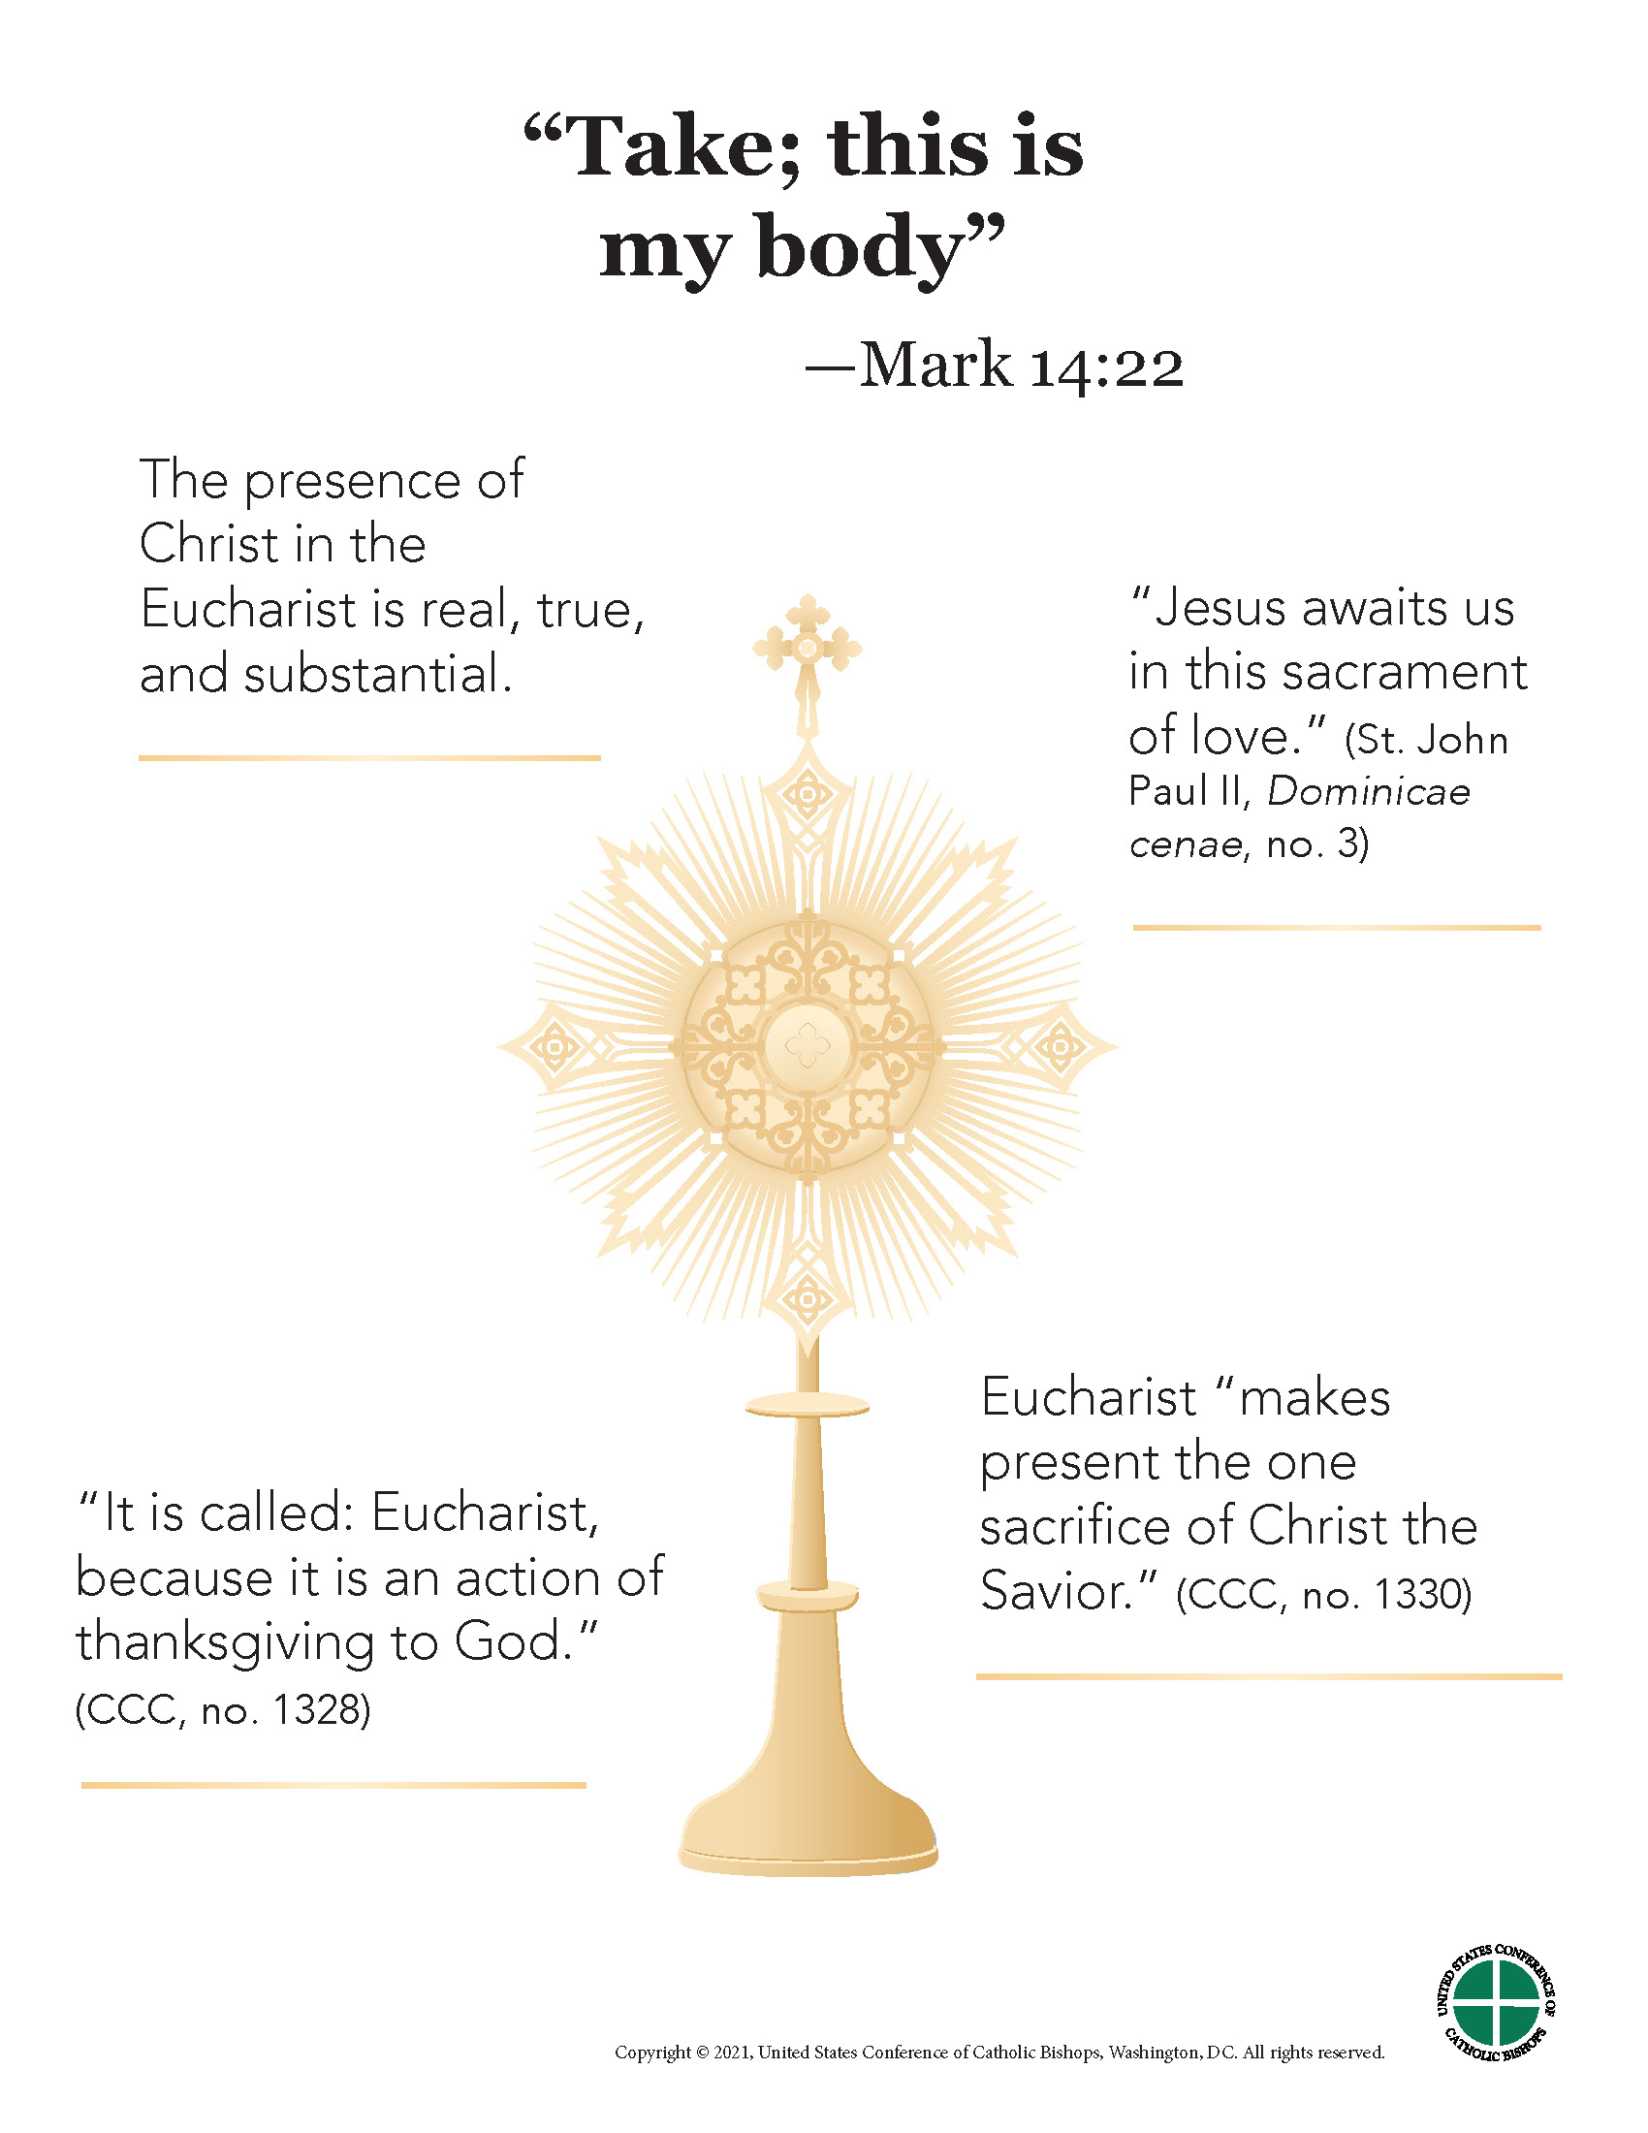 catholicism vs christianity